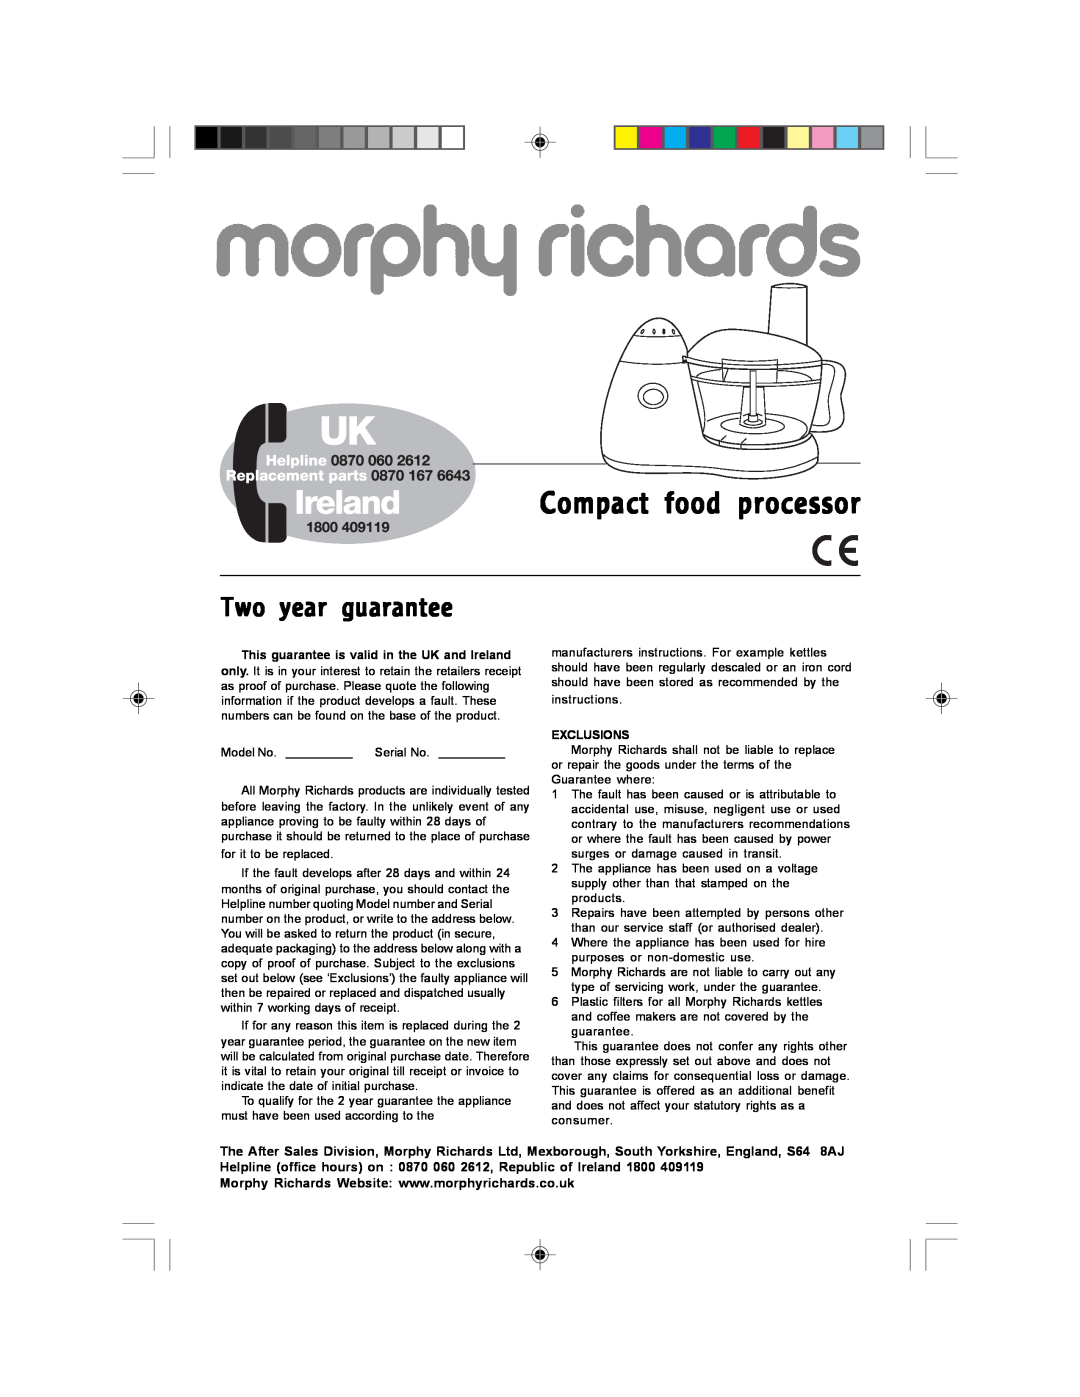 Morphy Richards Compact Food Processor manual Two year guarantee, Compact food processor, Exclusions 